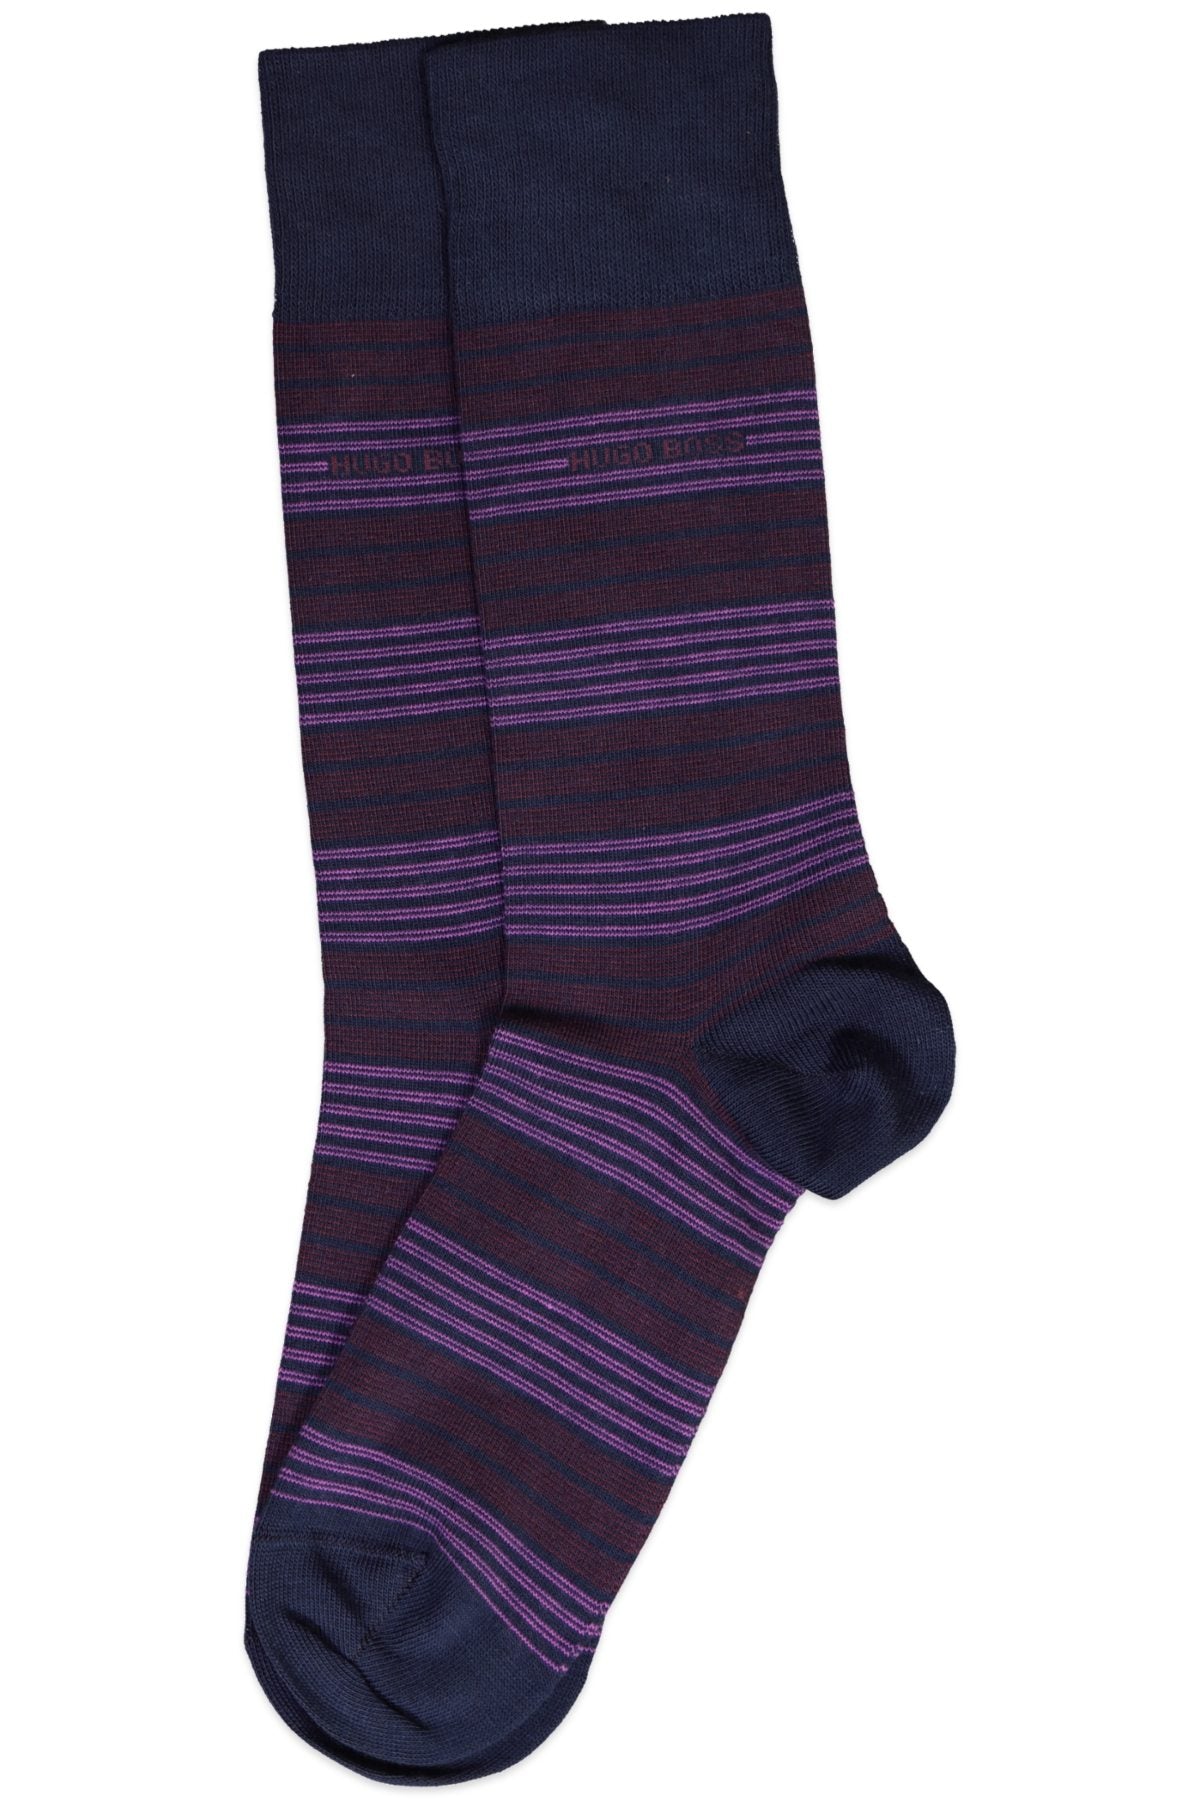 Hugo Boss Purple & Navy Striped Sock